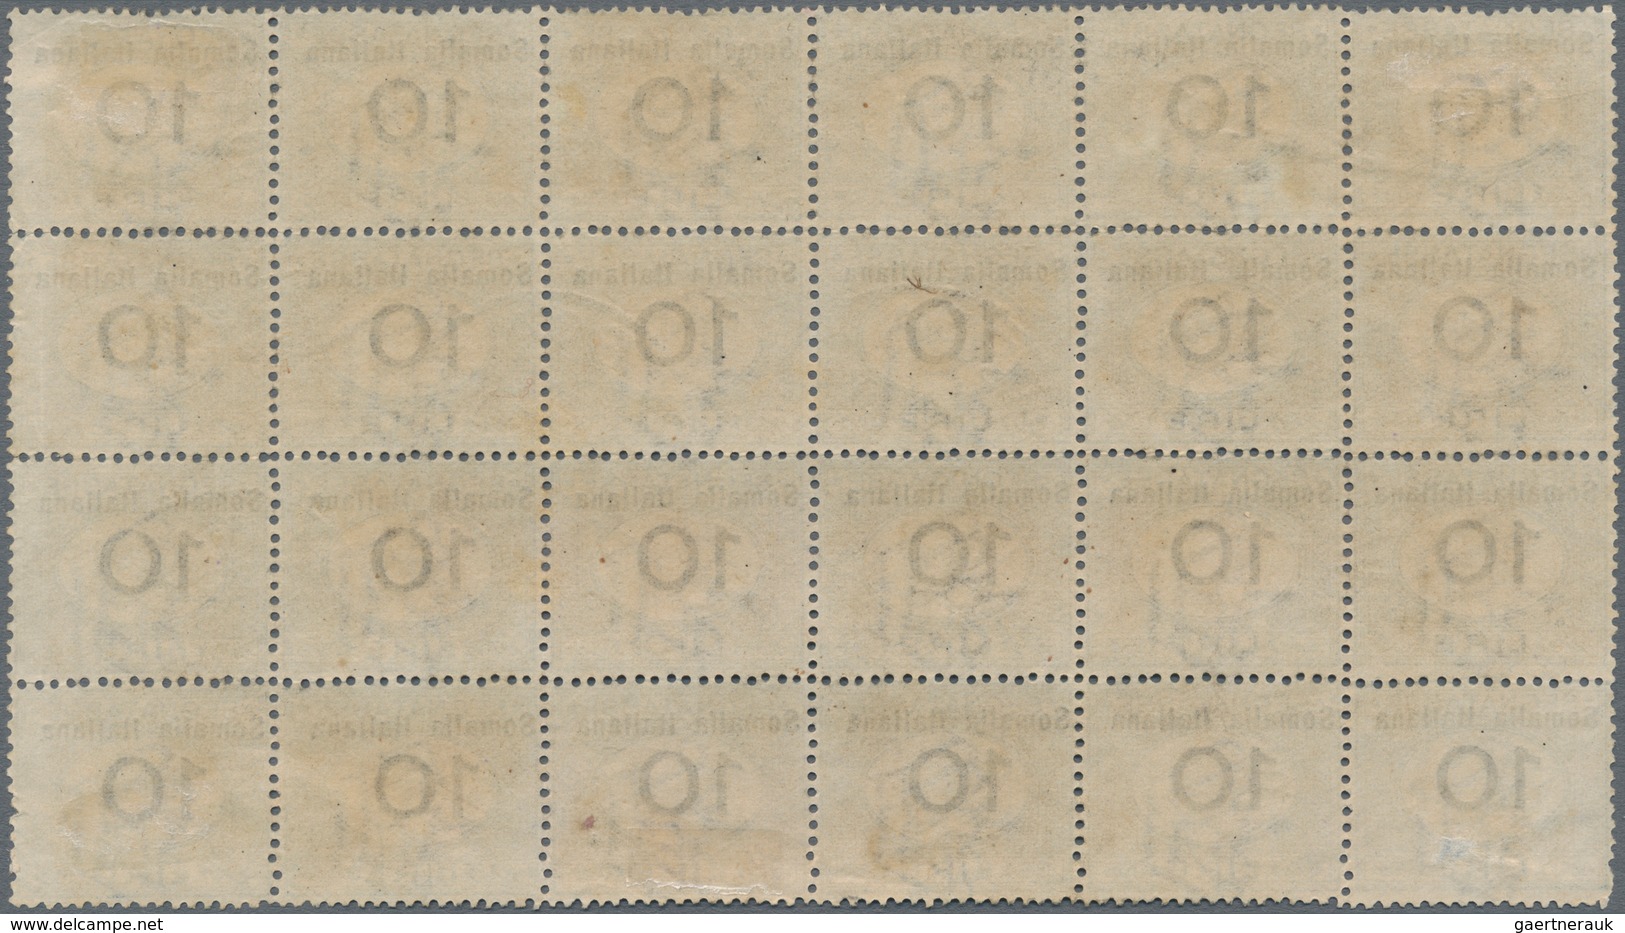 Italienisch-Somaliland - Portomarken: 1926, Postage Due 2 Lire Block Of 15 And 10 Lire Block Of 24 A - Somalia